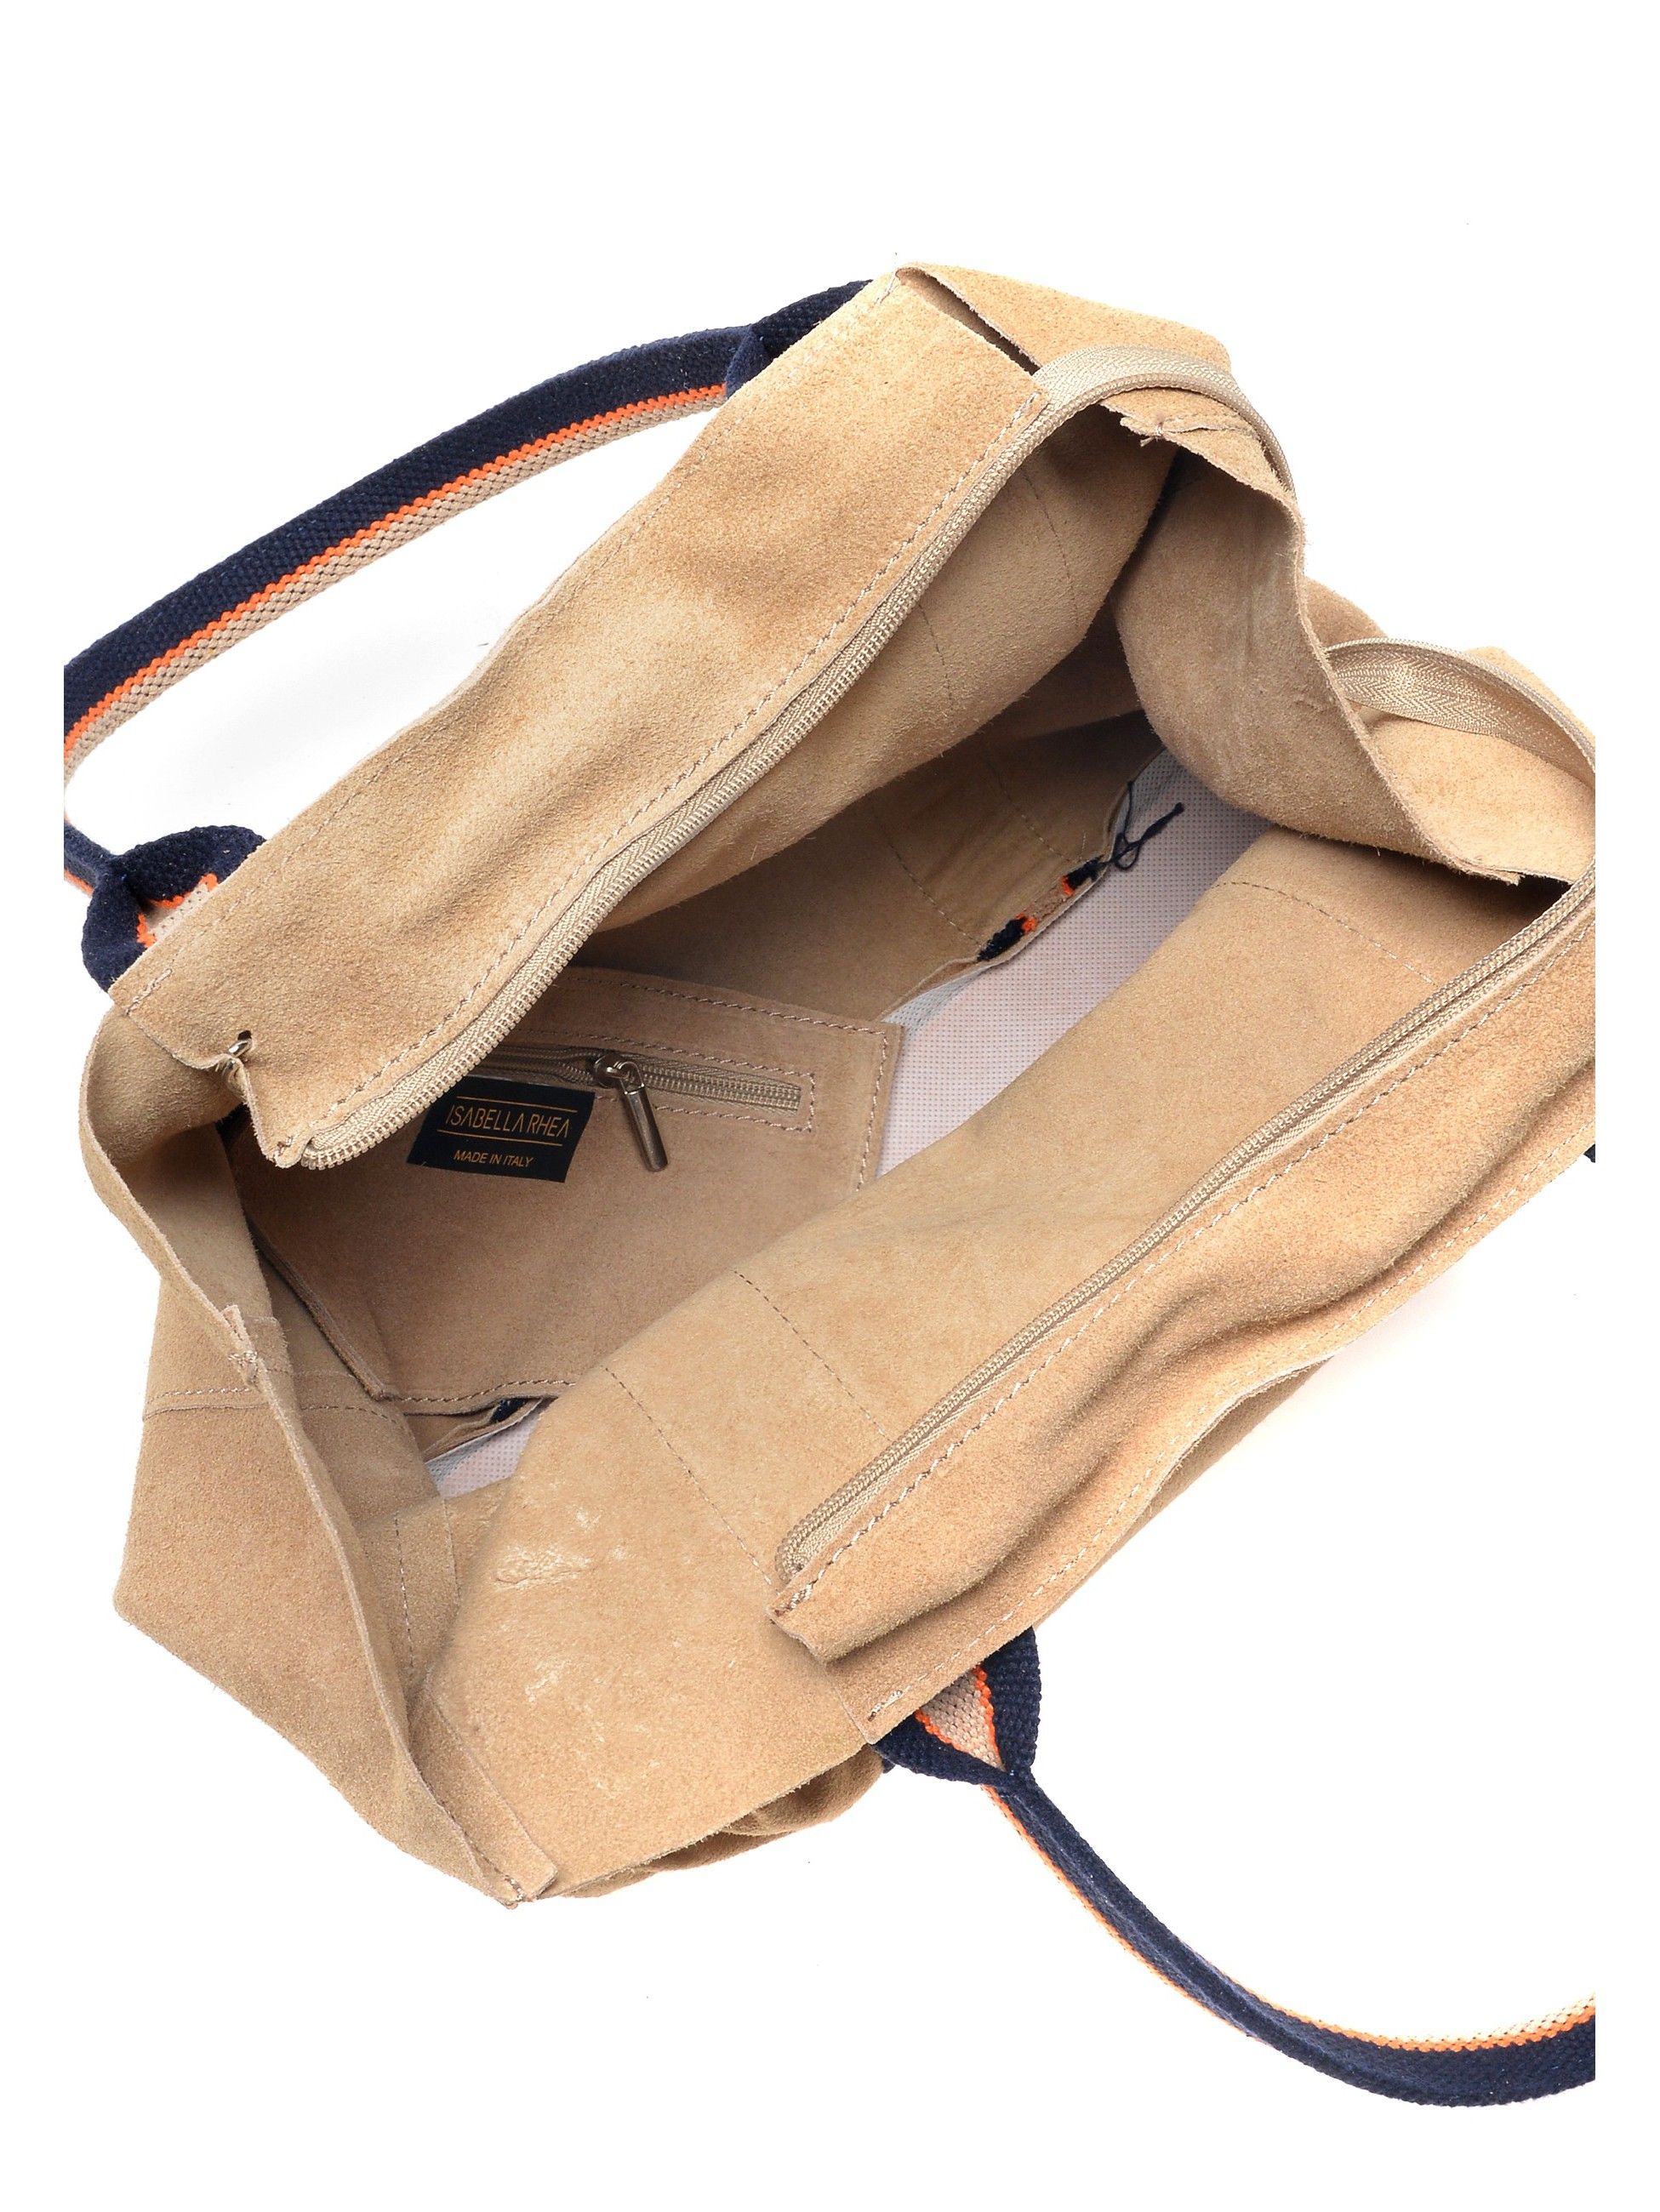 Top Handle Bag
100% suede
Top zip closure
Inner zip pocket
Dimensions (L): 28x36.5x11 cm
Handle: 43 cm
Shoulder strap: /